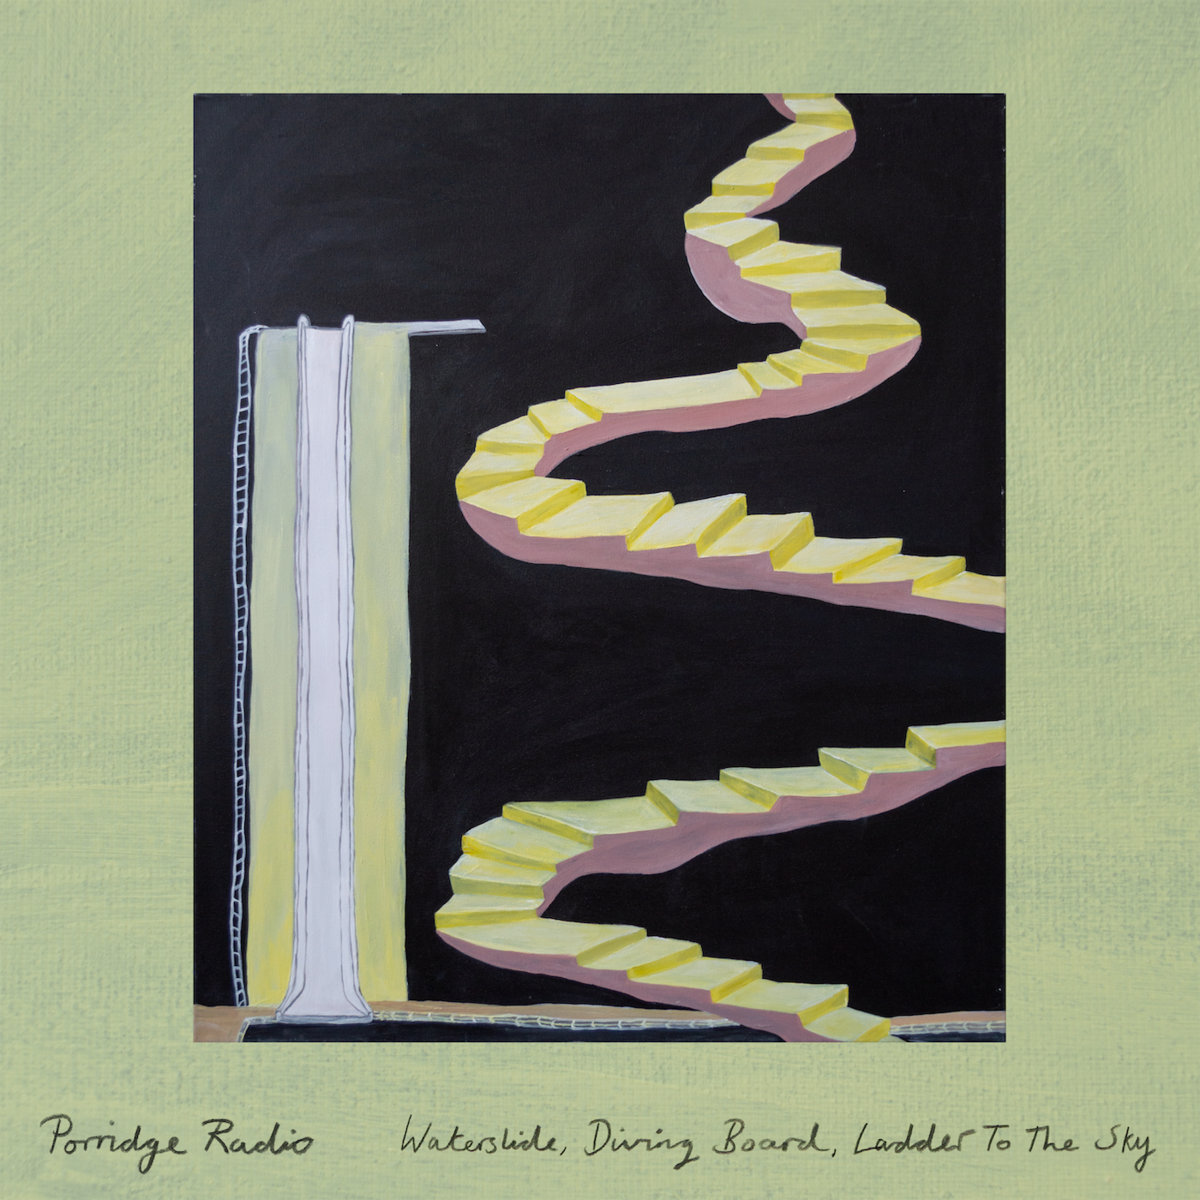 Porridge Radio "Waterslide, Diving Board, Ladder To The Sky" LP Limitado